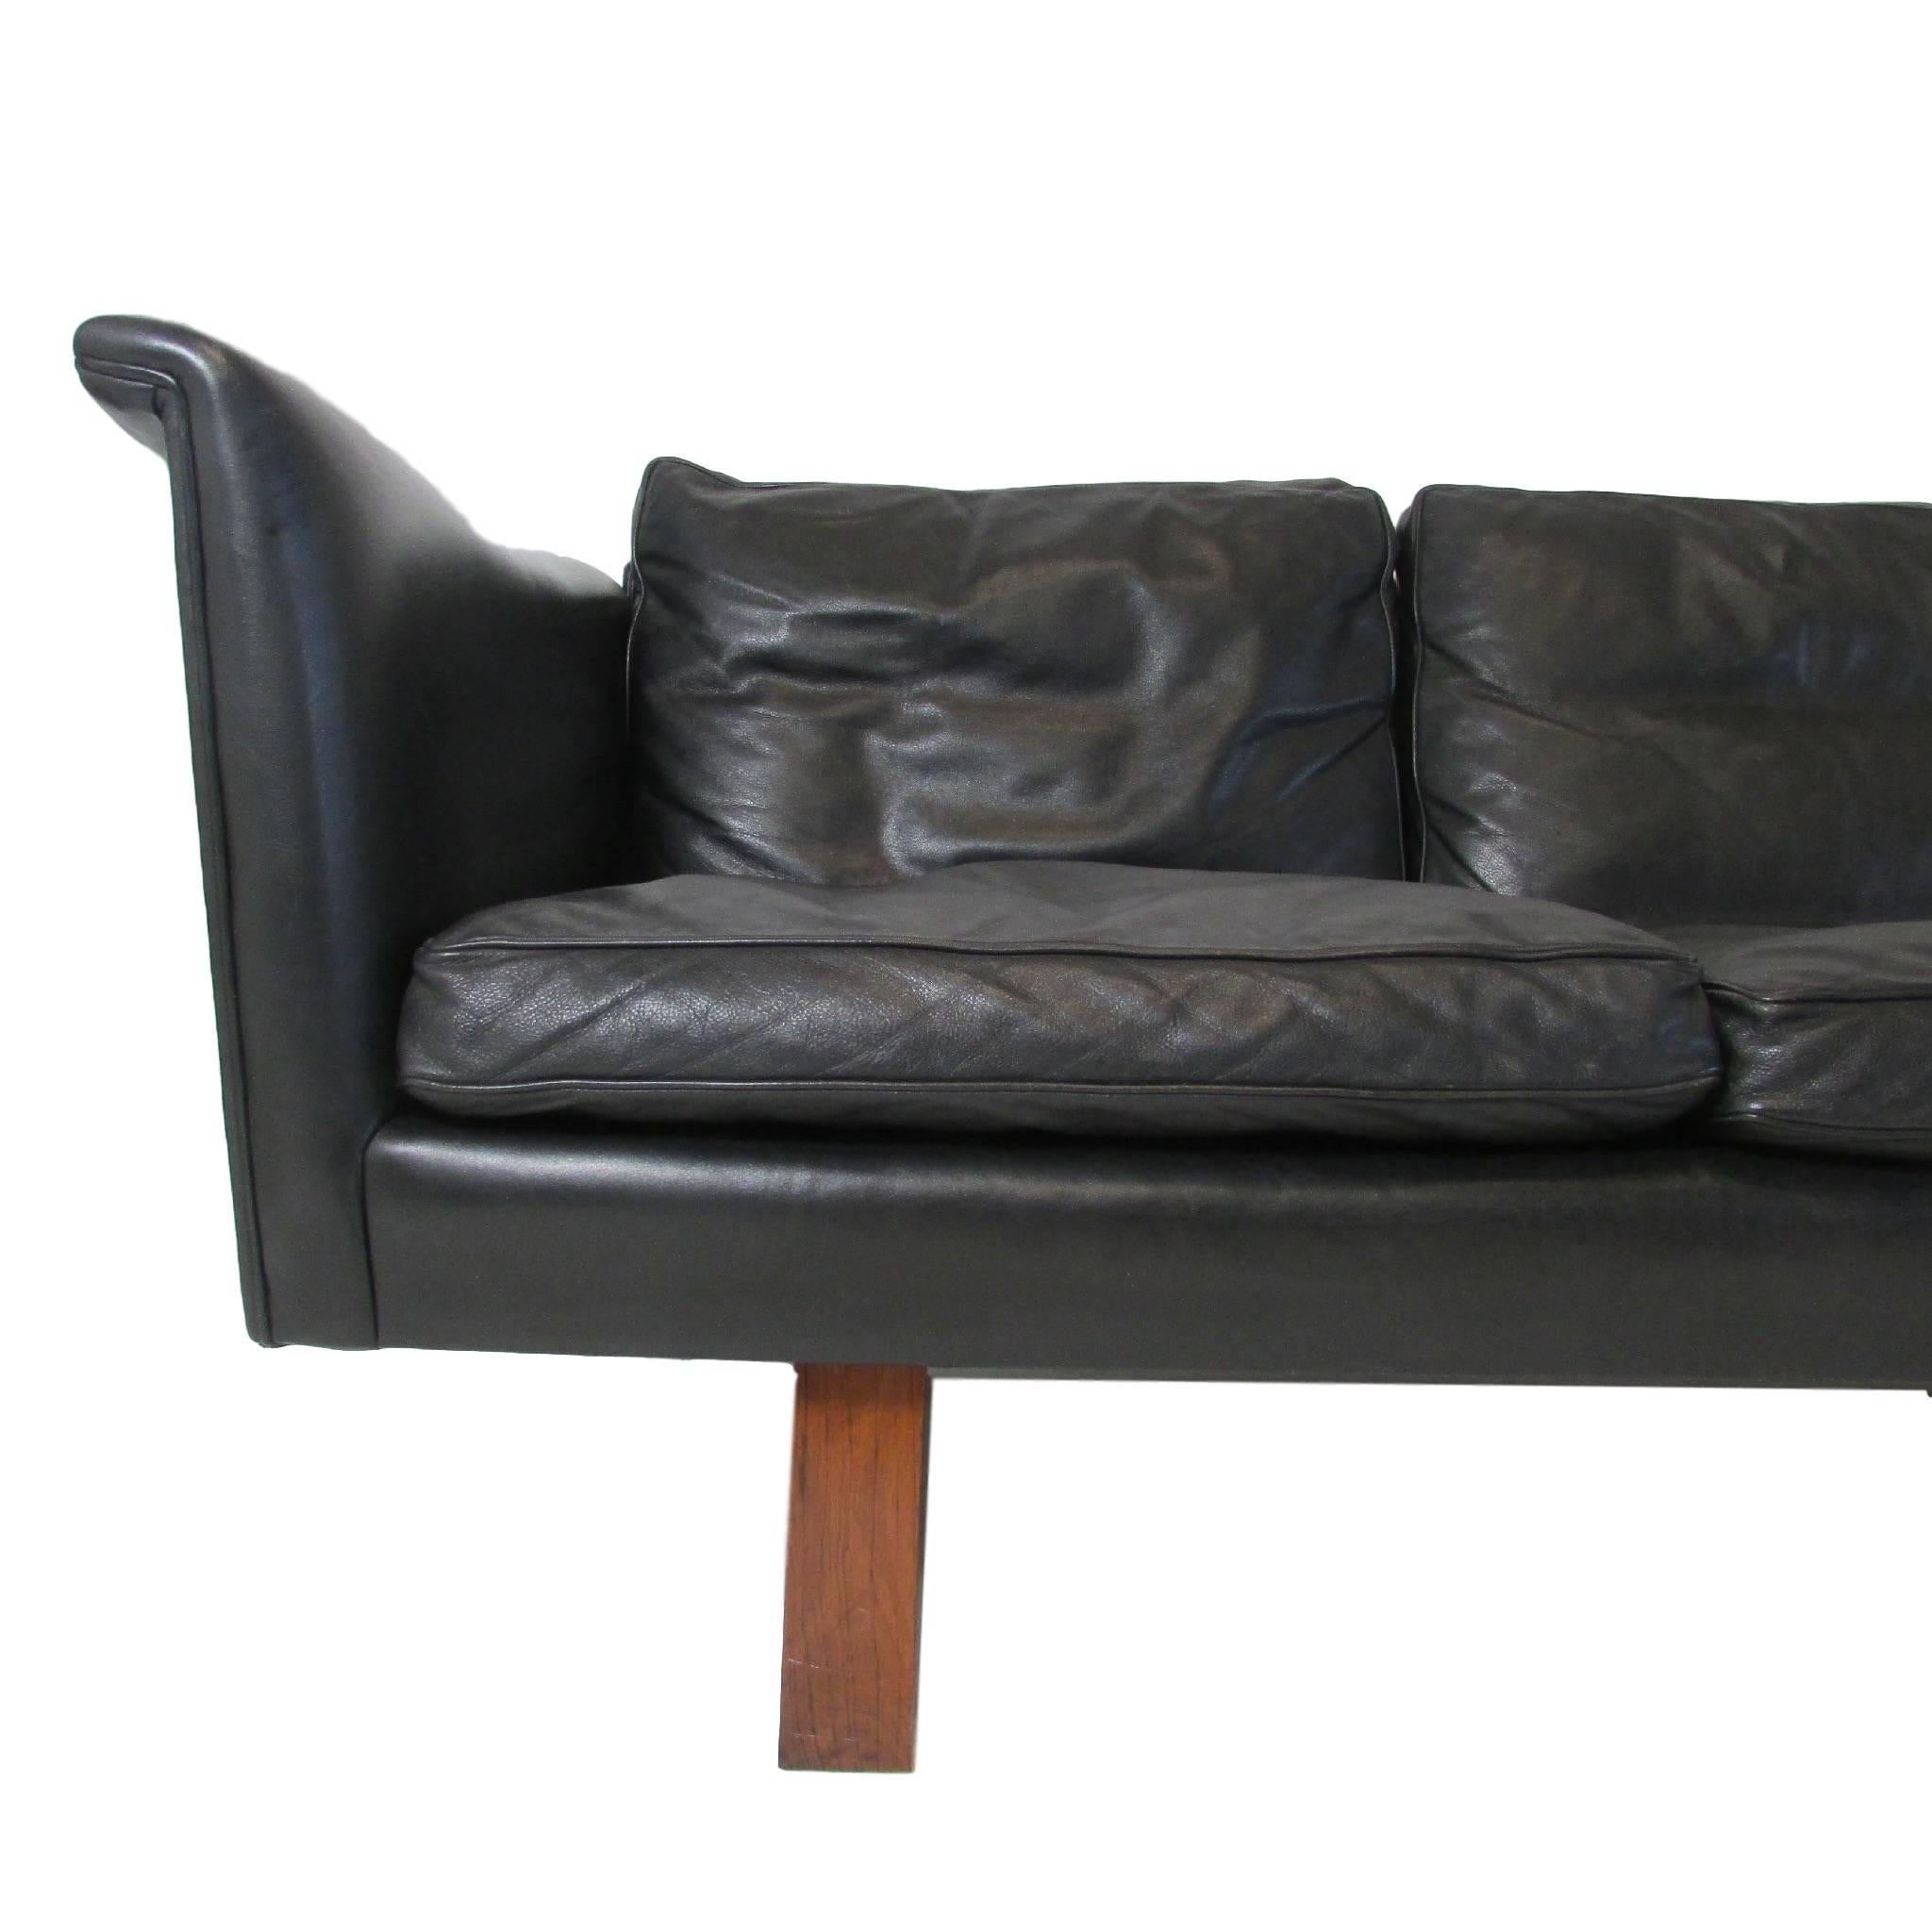 Mid-20th Century Danish Midcentury Sofa by Aarhuspol